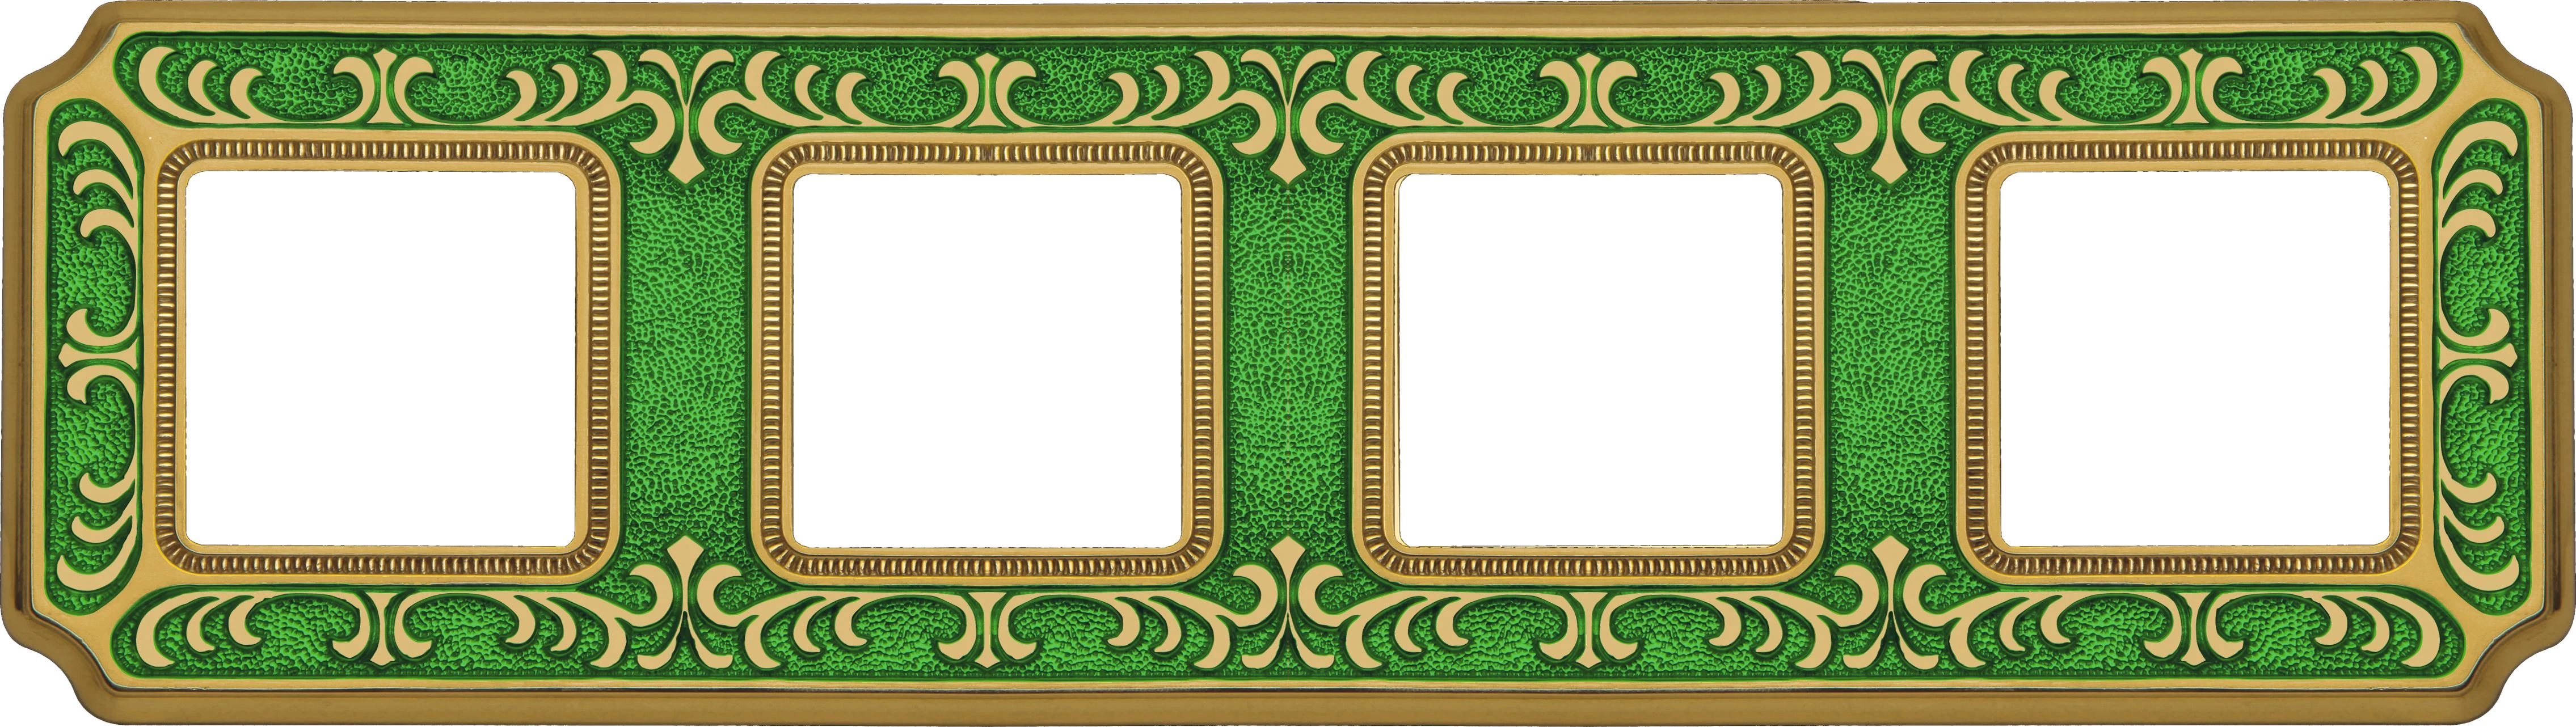 артикул FD01354VEEN название Рамка 4-ая (четверная), Fede, Серия Siena, Изумрудно-зеленый